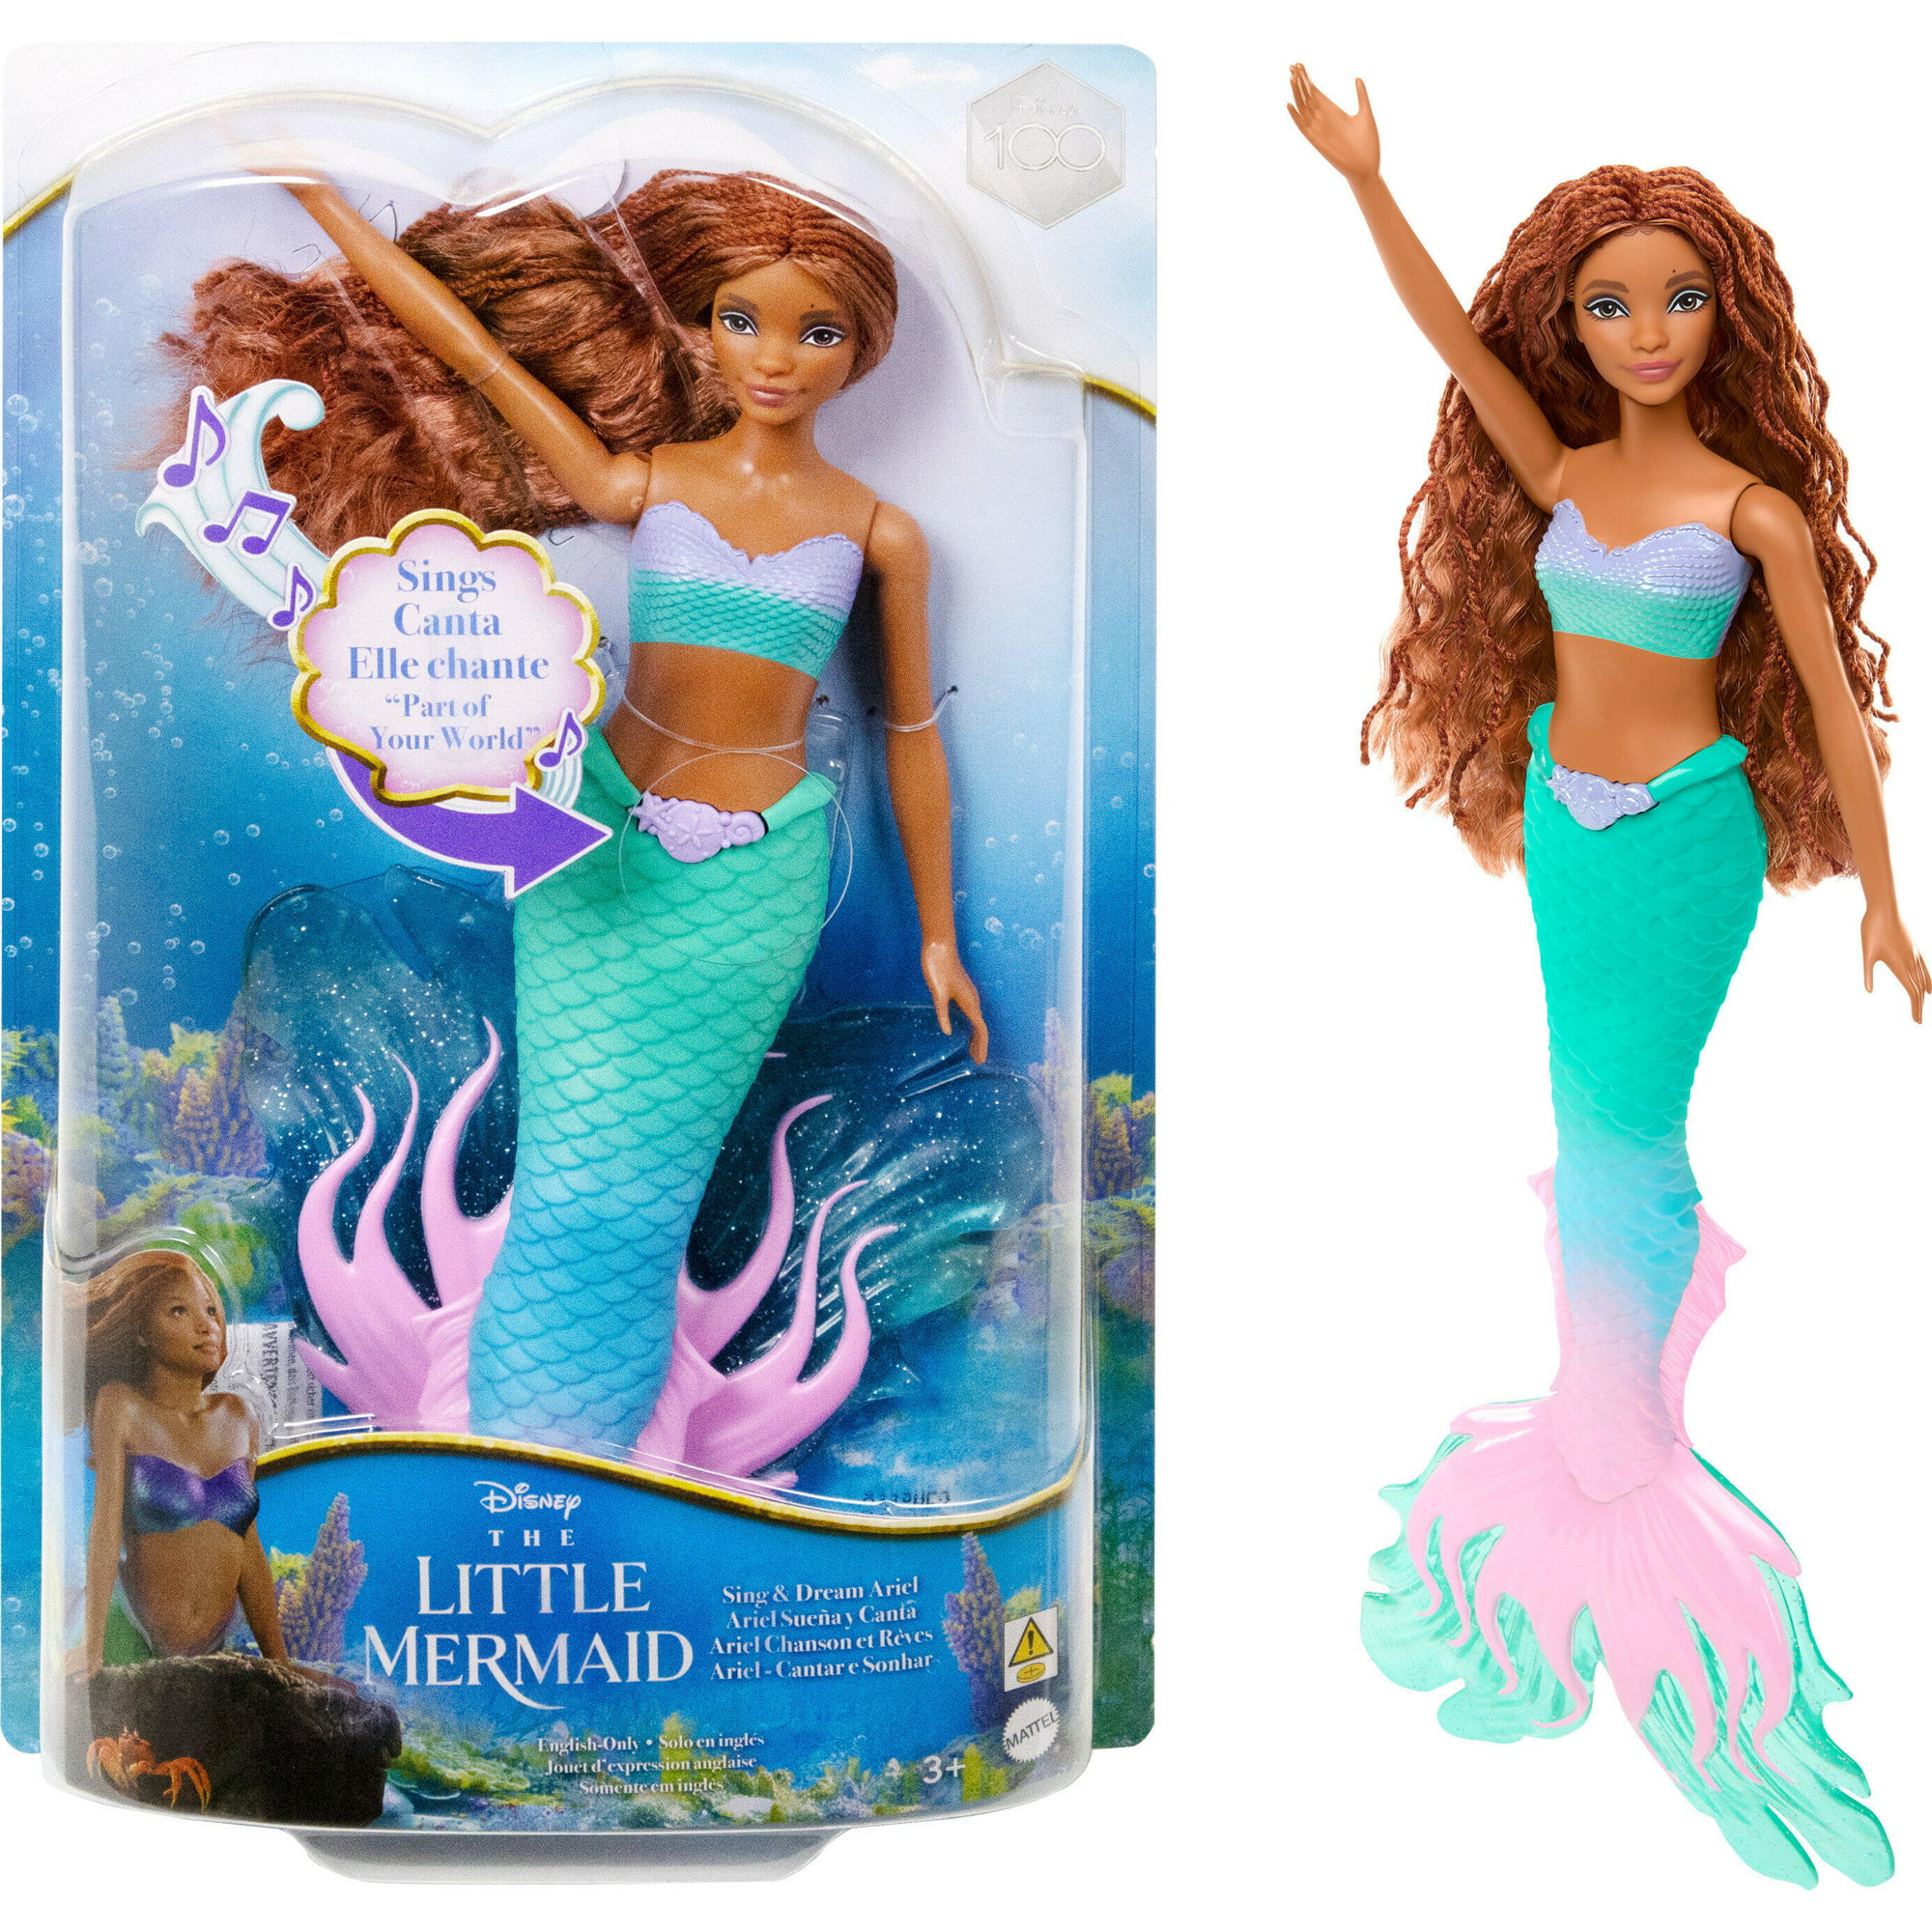 Disney The Little Mermaid Sing and Dream Ariel Fashion Doll $9.90 + Free Shipping w/ Prime or on $35+ or FS w/ Walmart+ or $35+